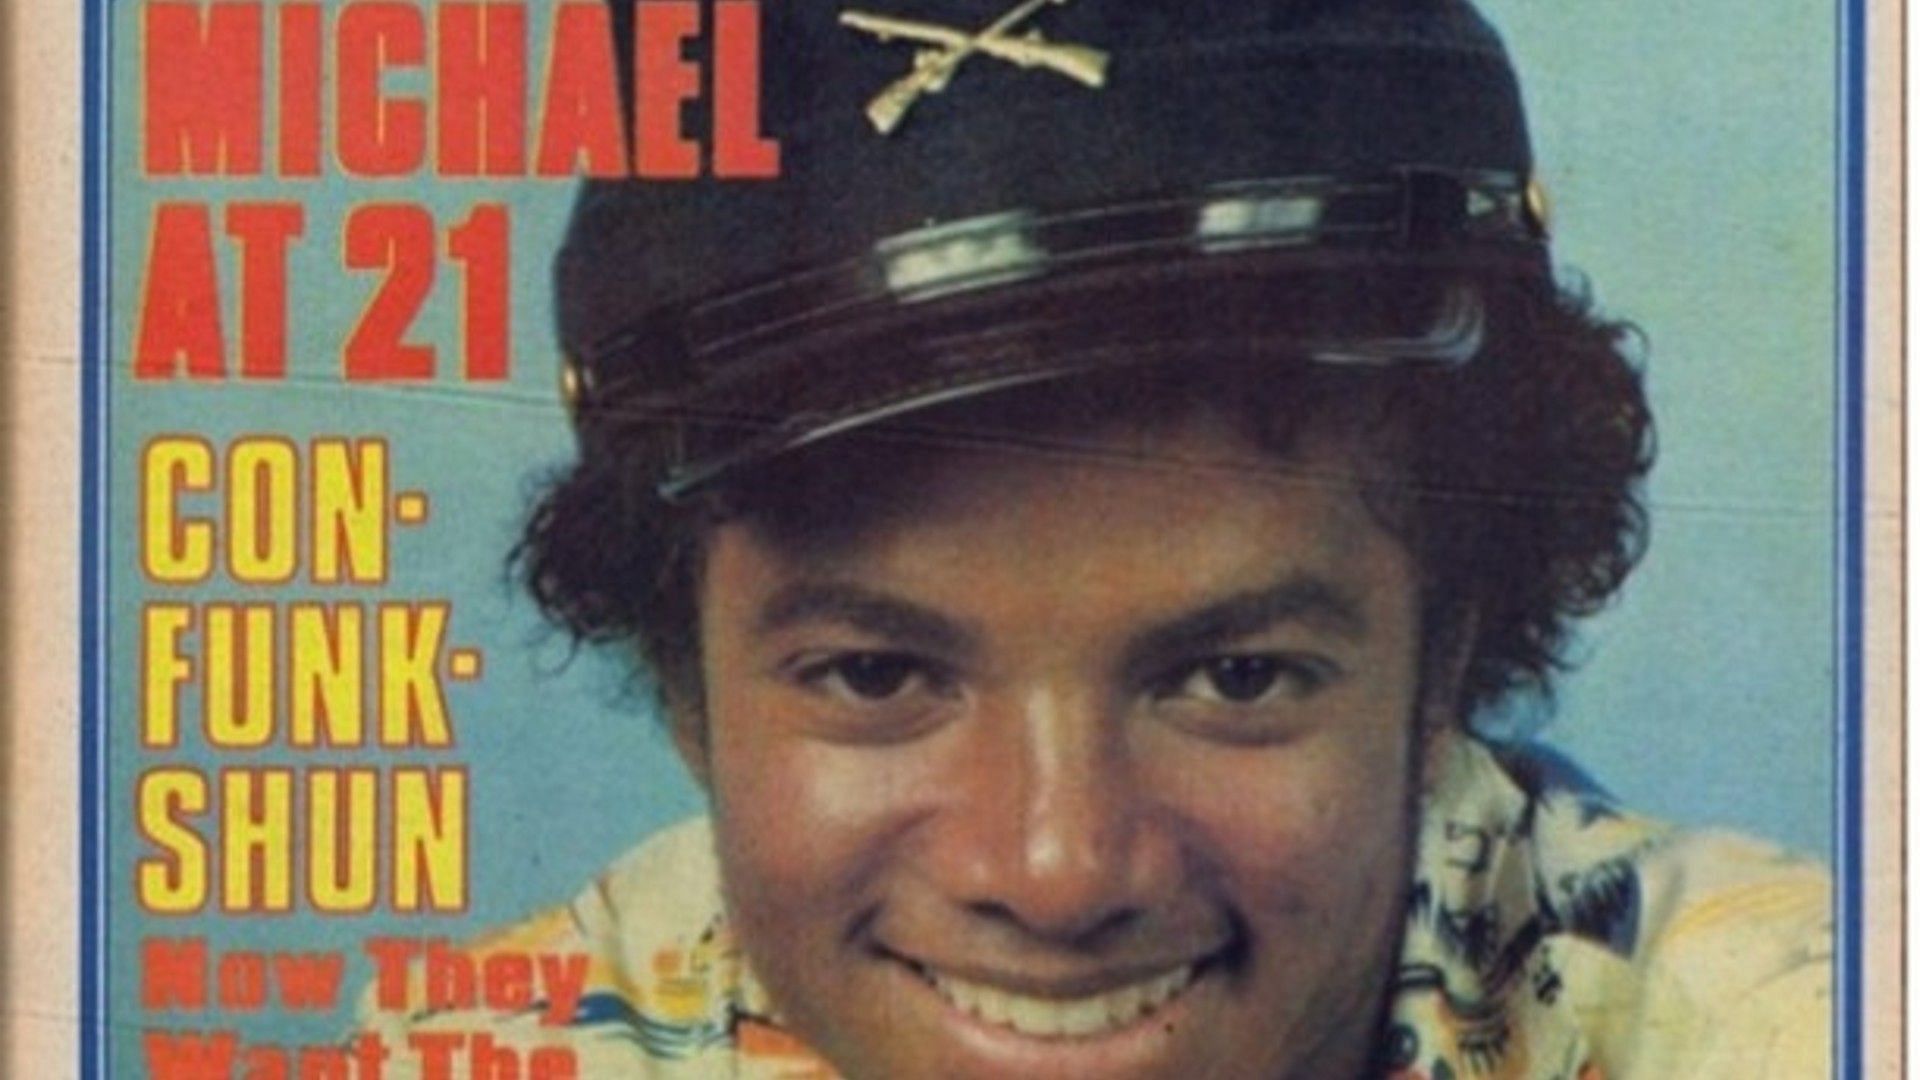 Michael Jackson on a magazine cover (Image via Instagram - @michaeljackson)